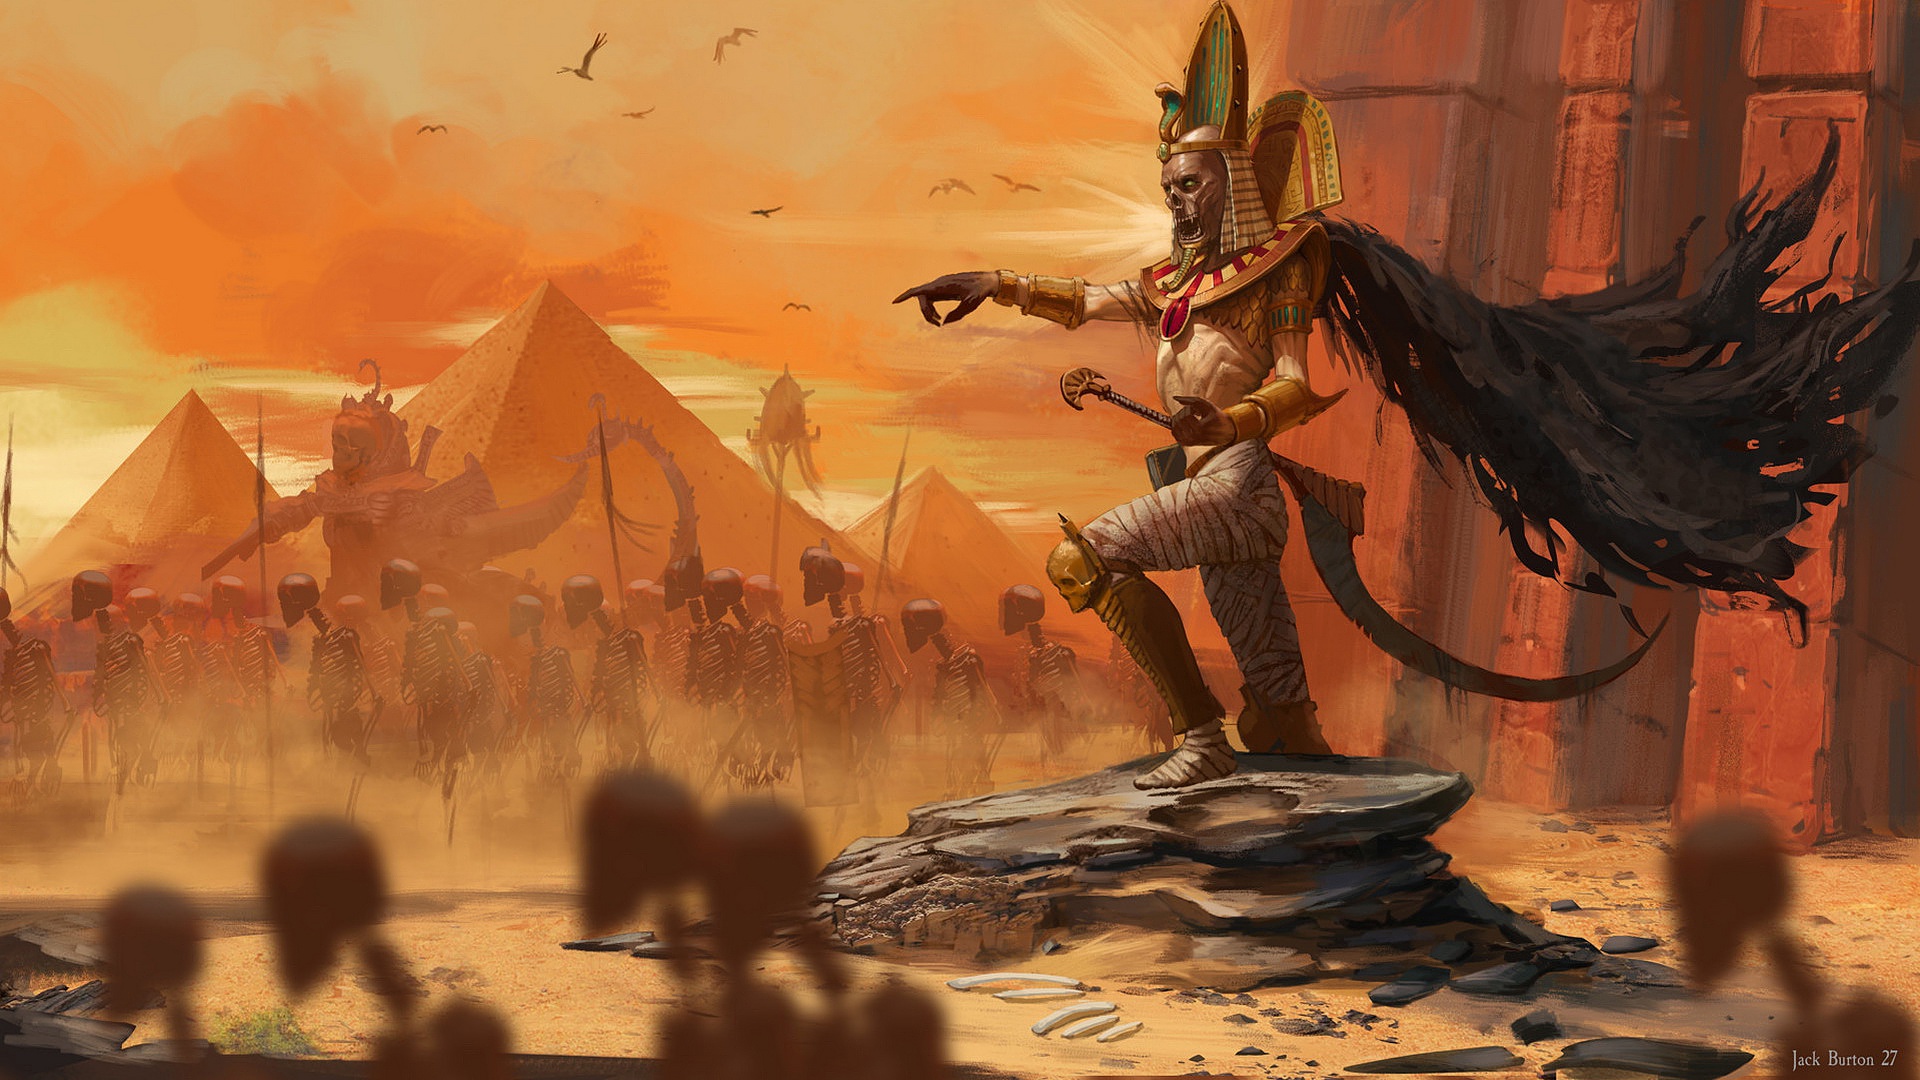 875558 descargar imagen videojuego, total war: warhammer ii, momia, esqueleto, reyes funerarios: fondos de pantalla y protectores de pantalla gratis